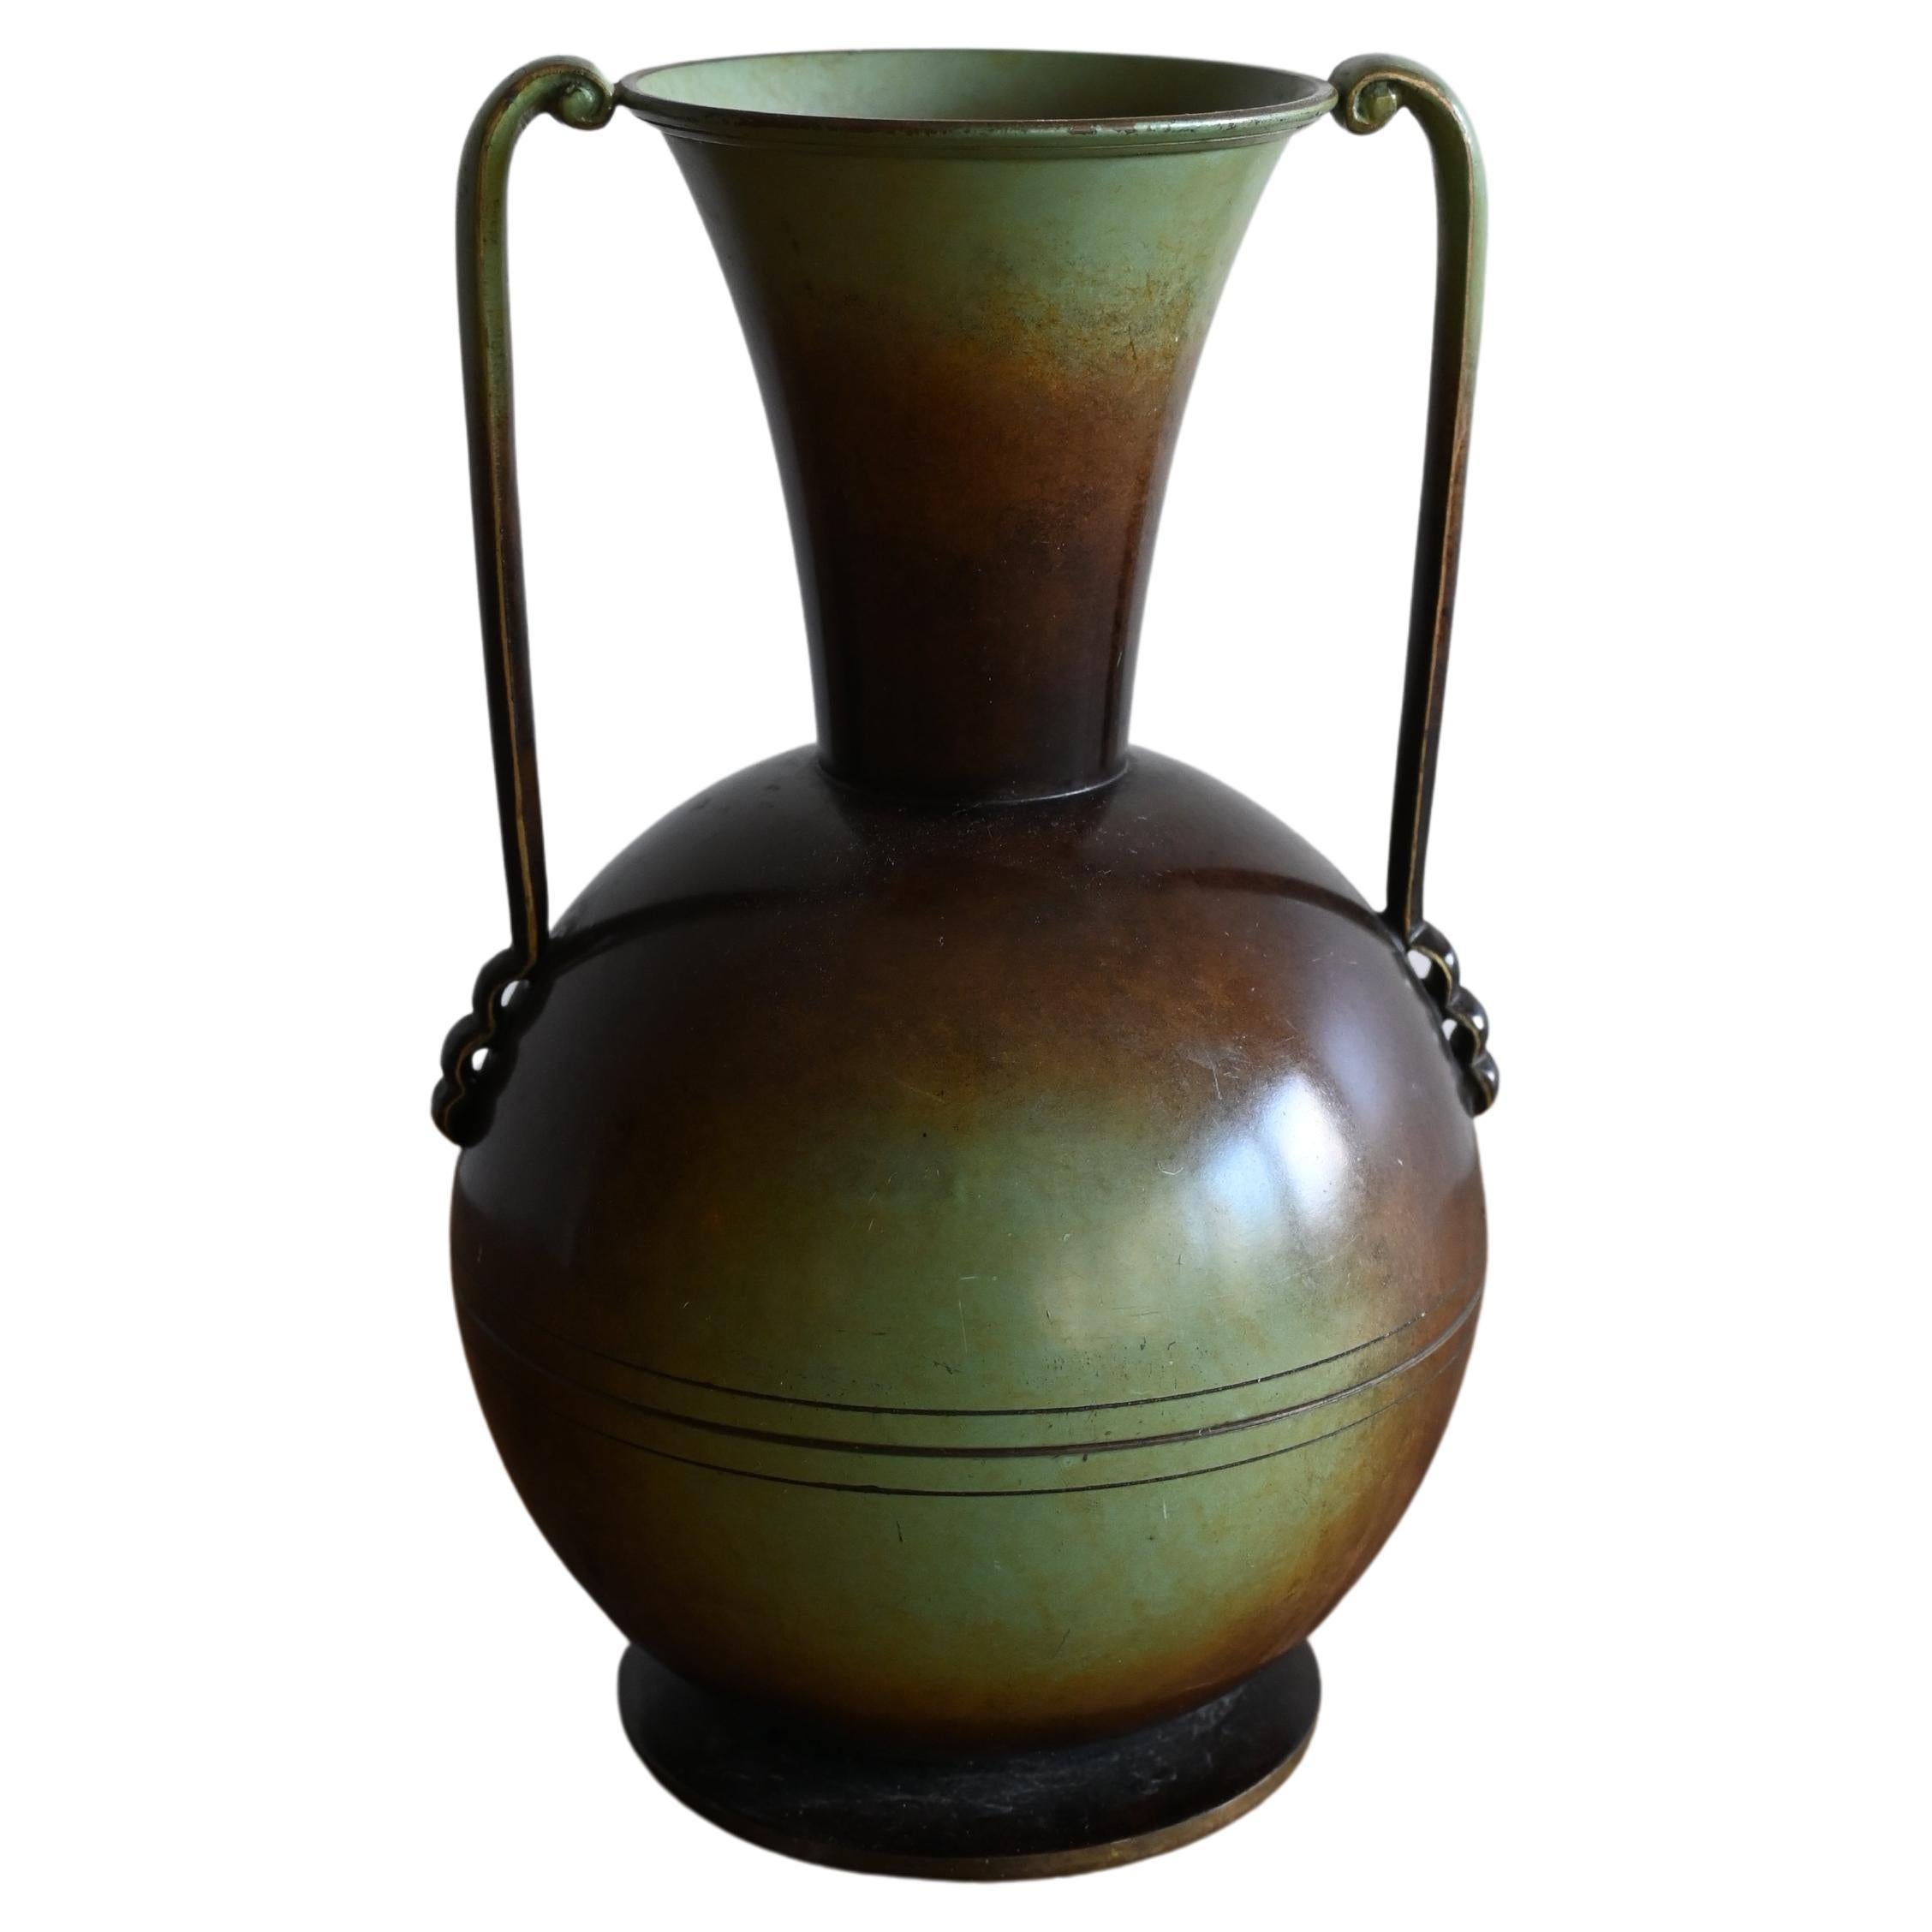 Ystad-Metall Vases and Vessels